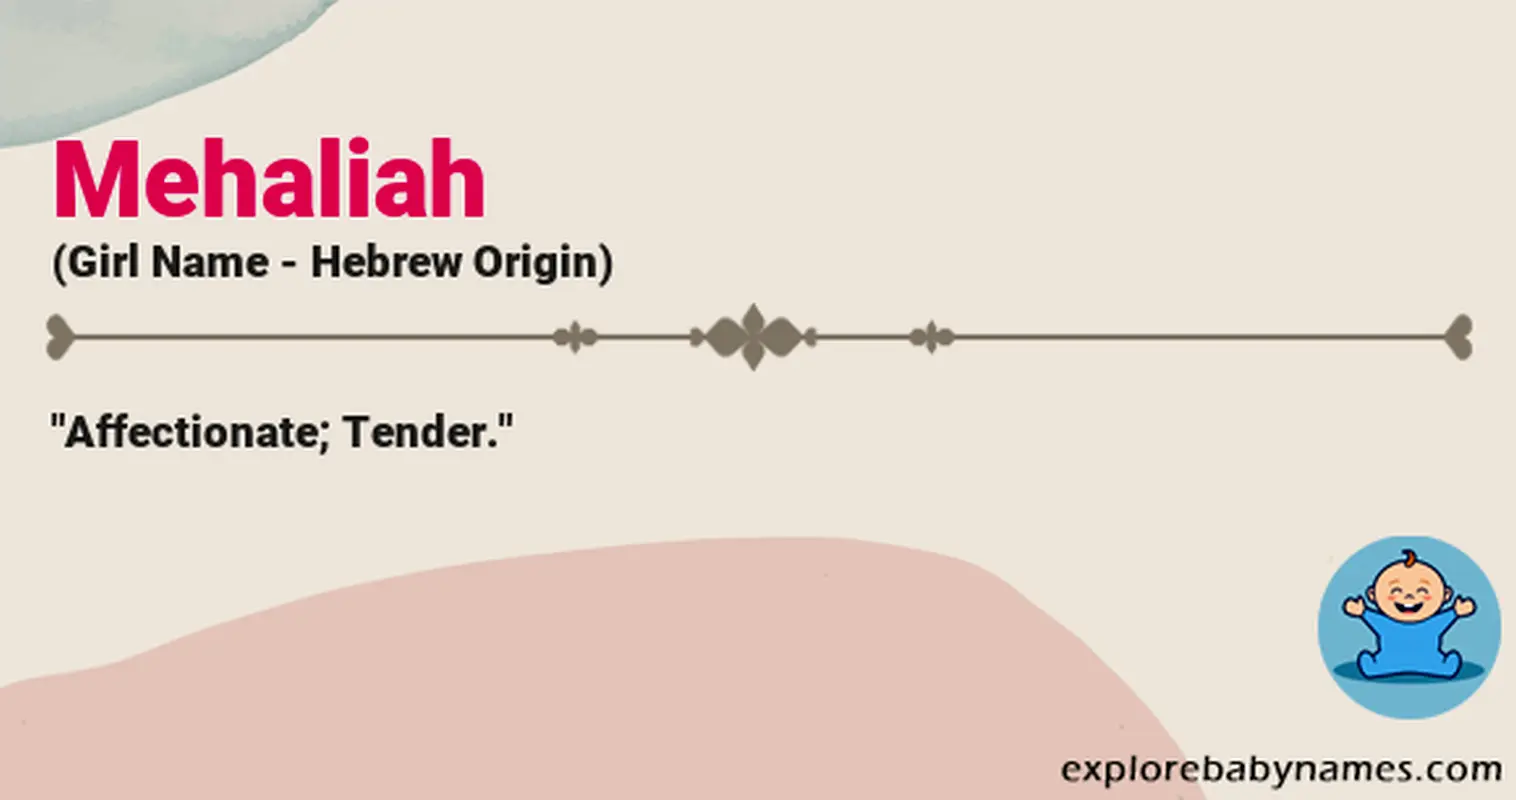 Meaning of Mehaliah